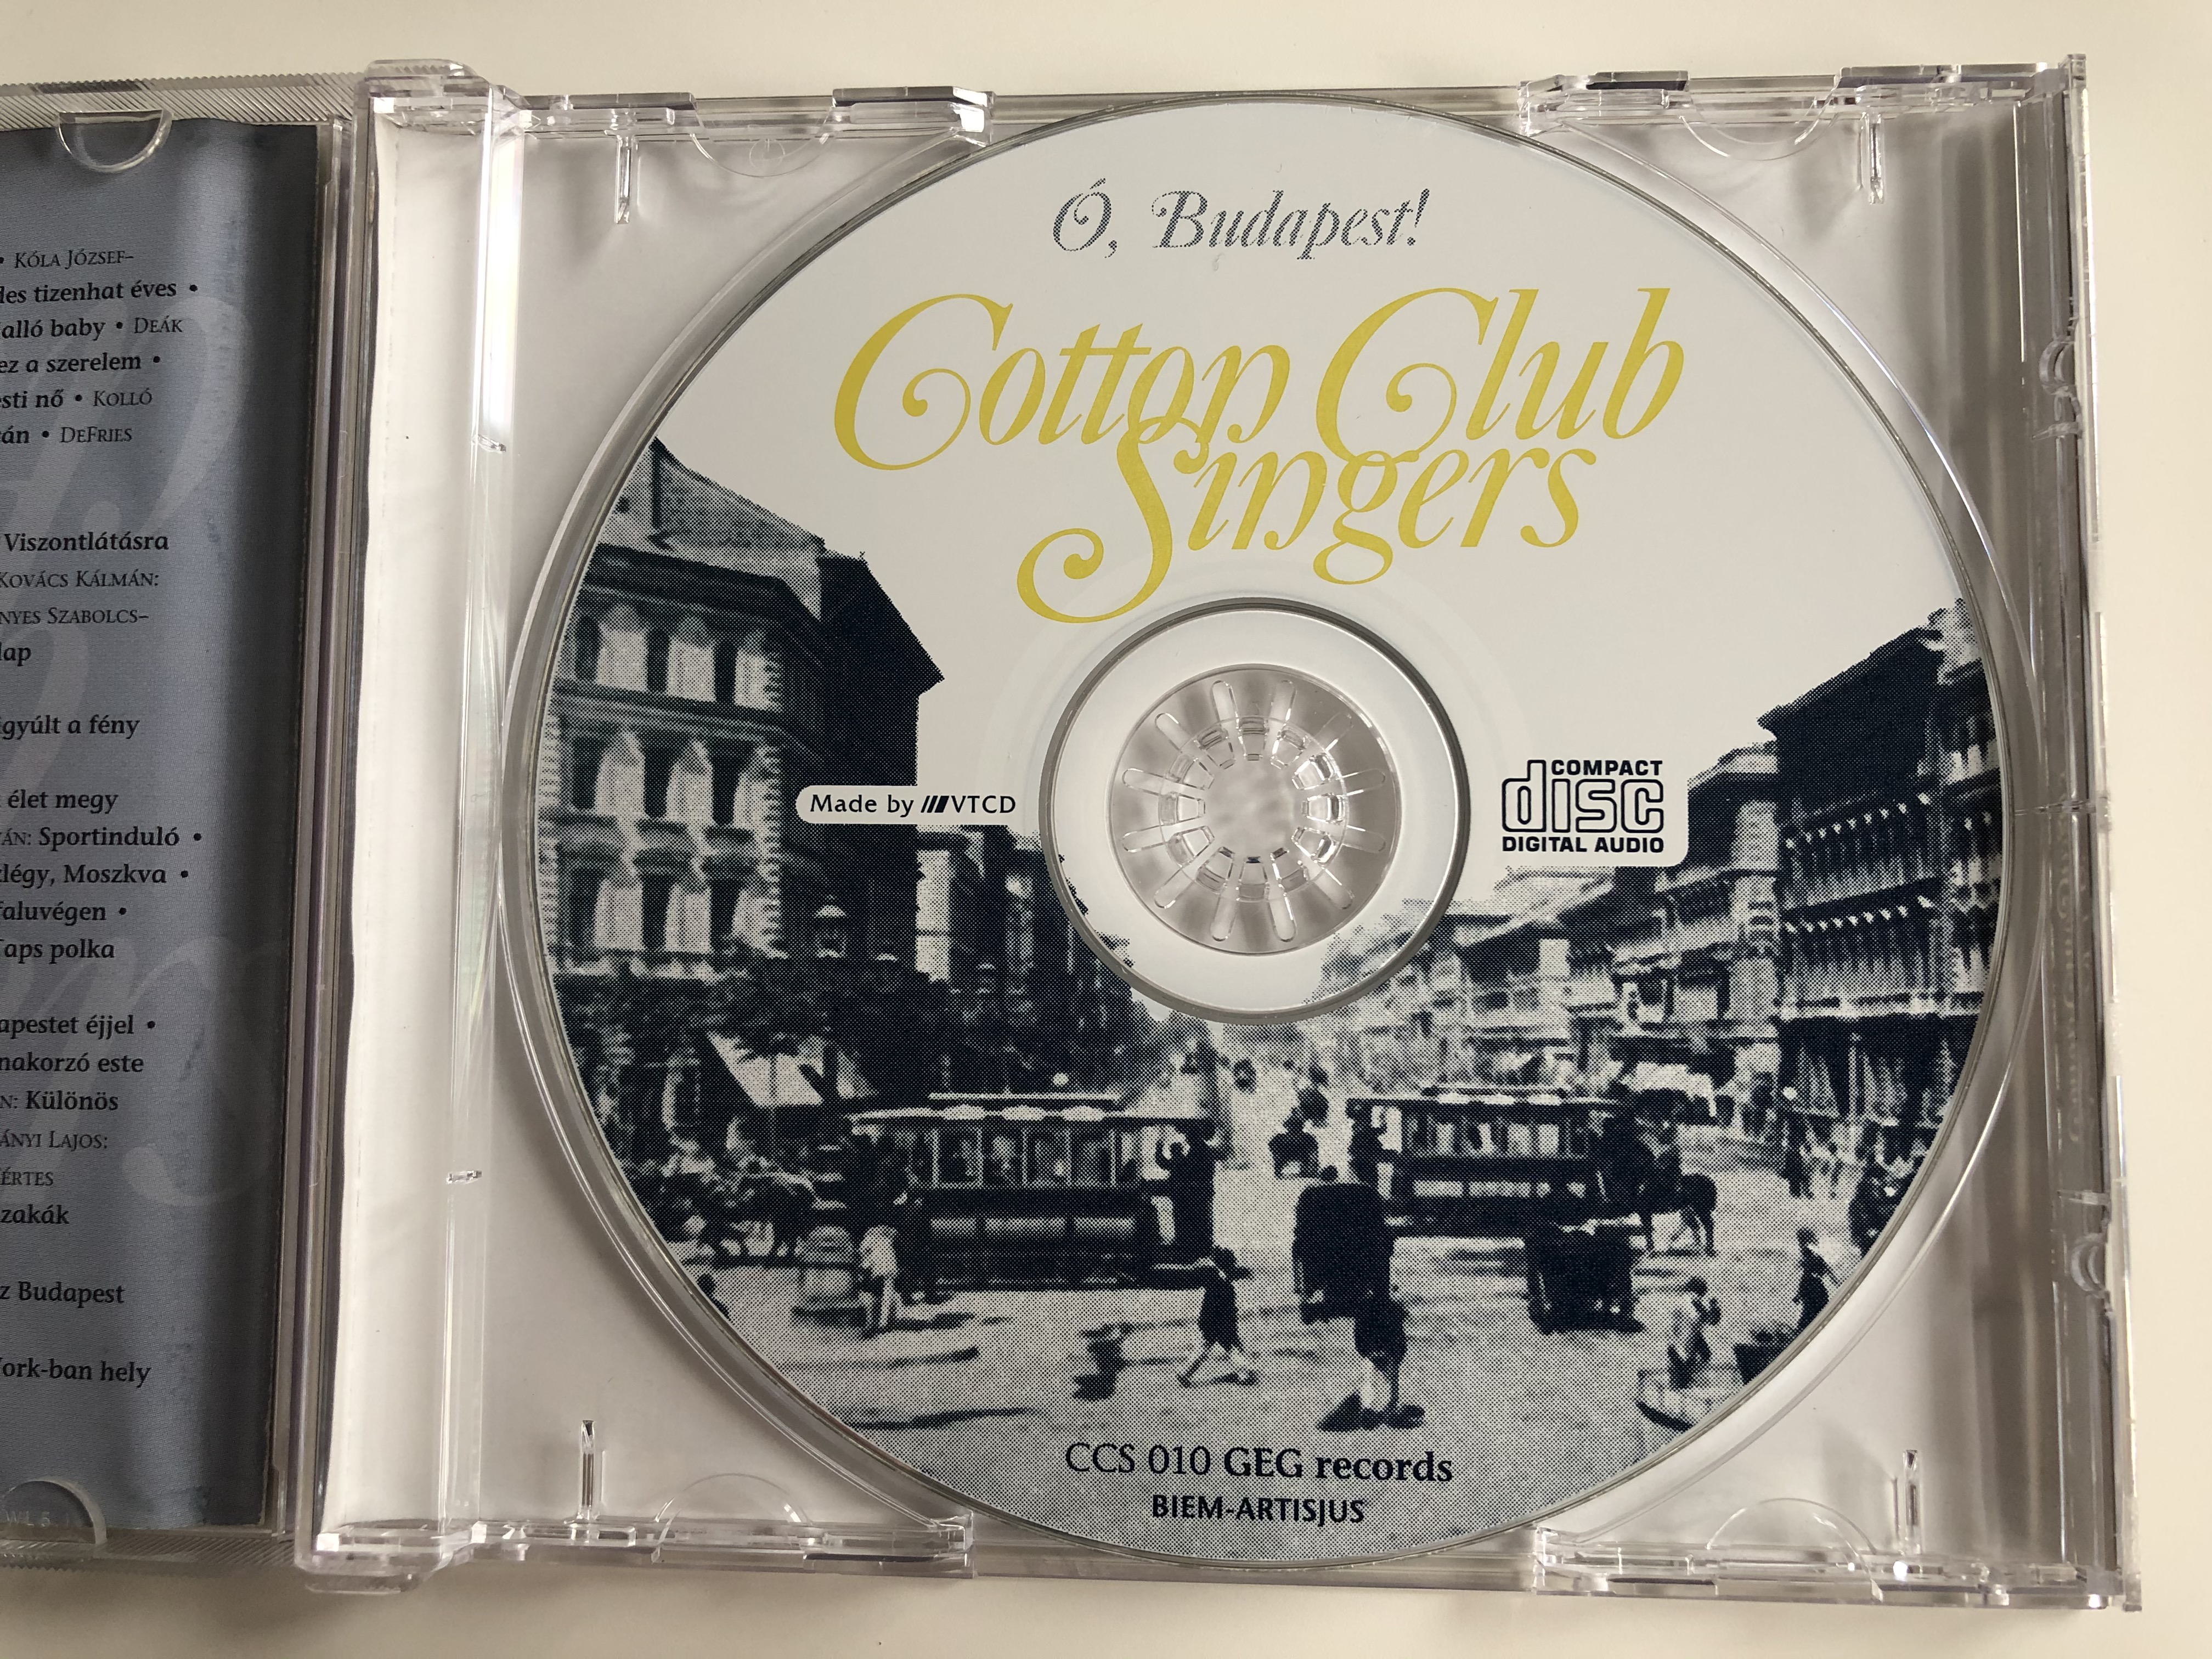 cotton-club-singers-budapest-geg-records-audio-cd-2000-ccs-010-4-.jpg